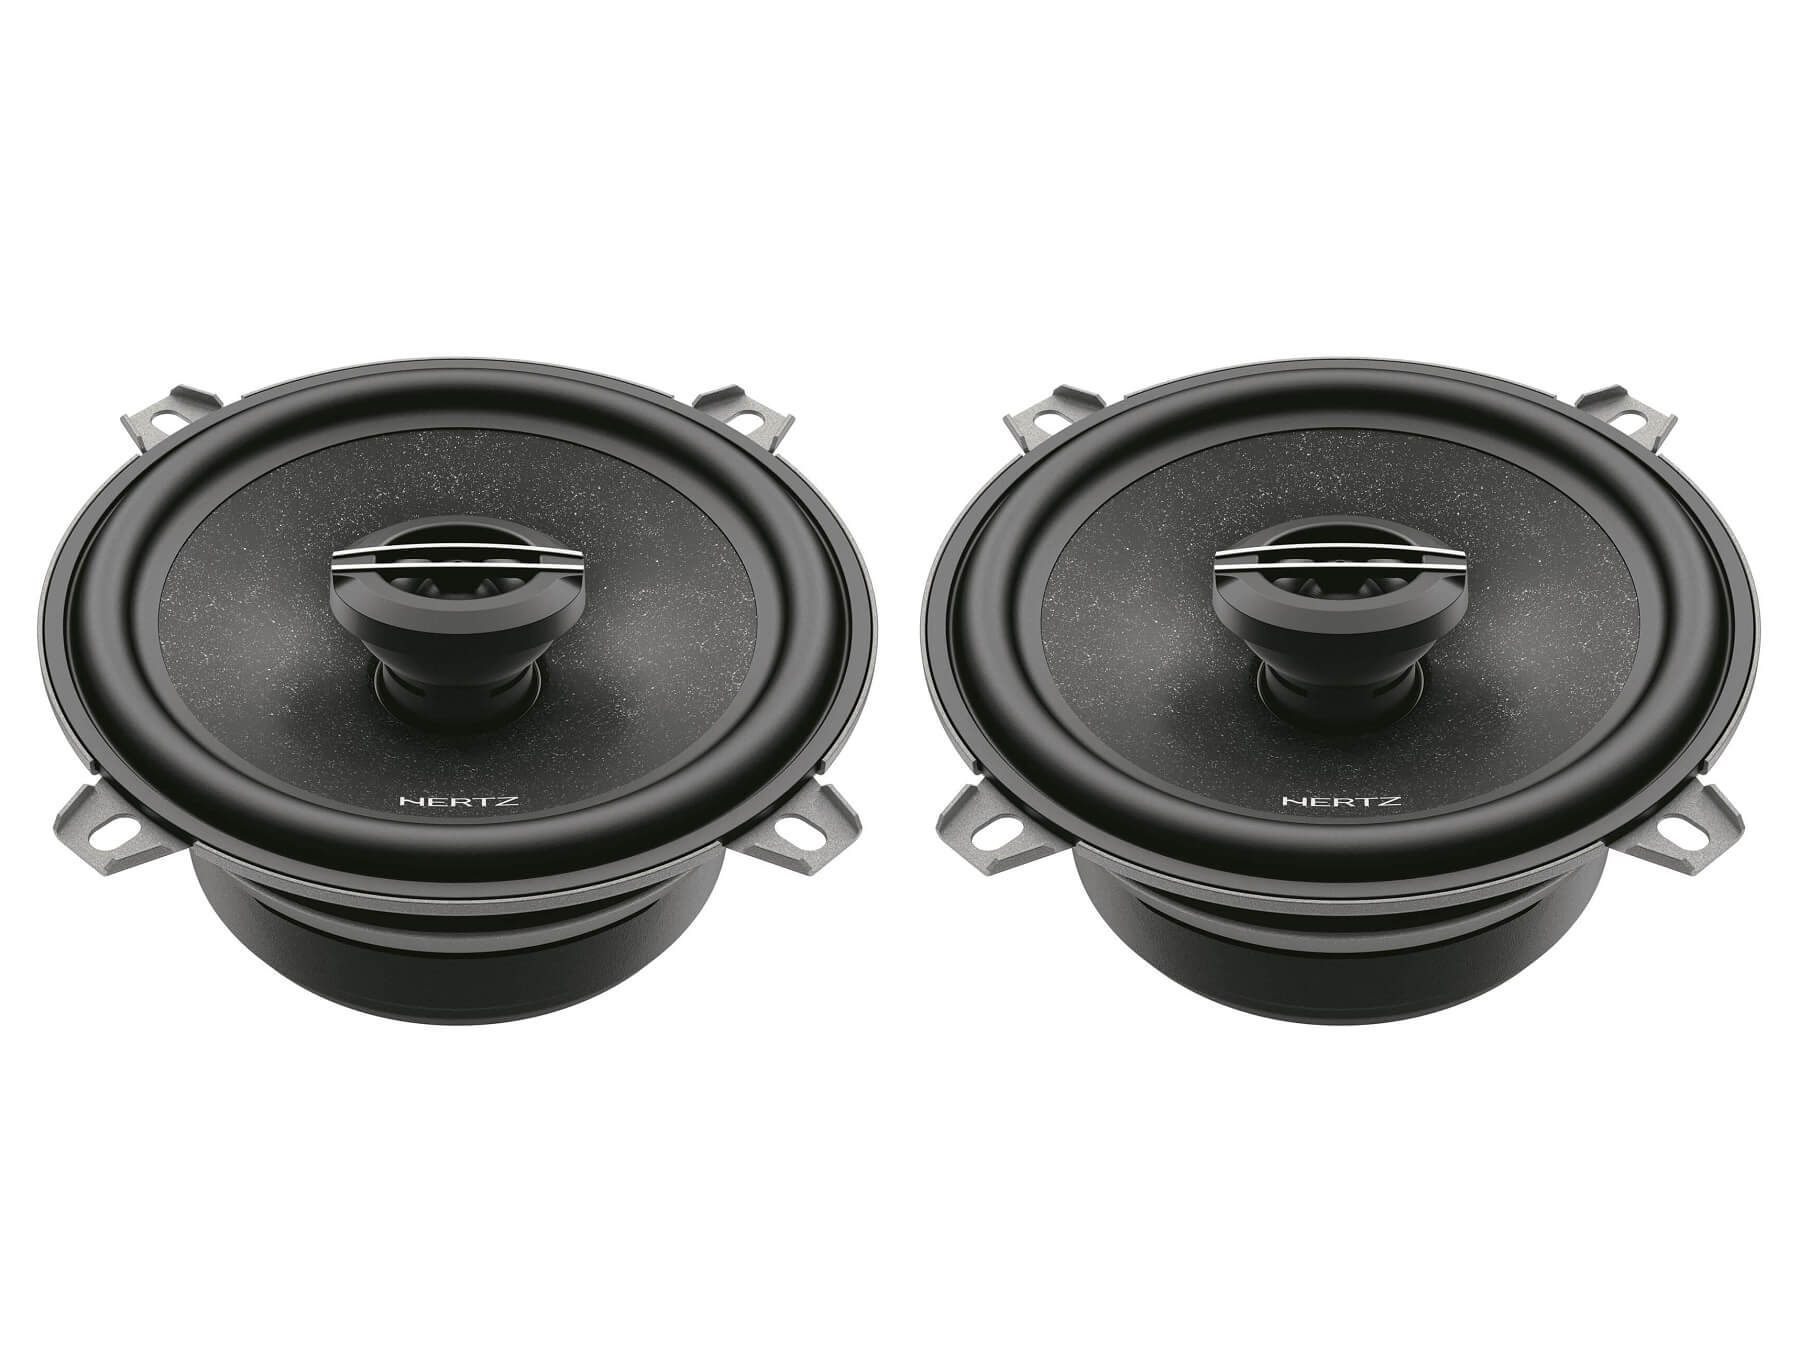 Hertz Cento CX 130 - 2 Way Coaxial Speaker Set